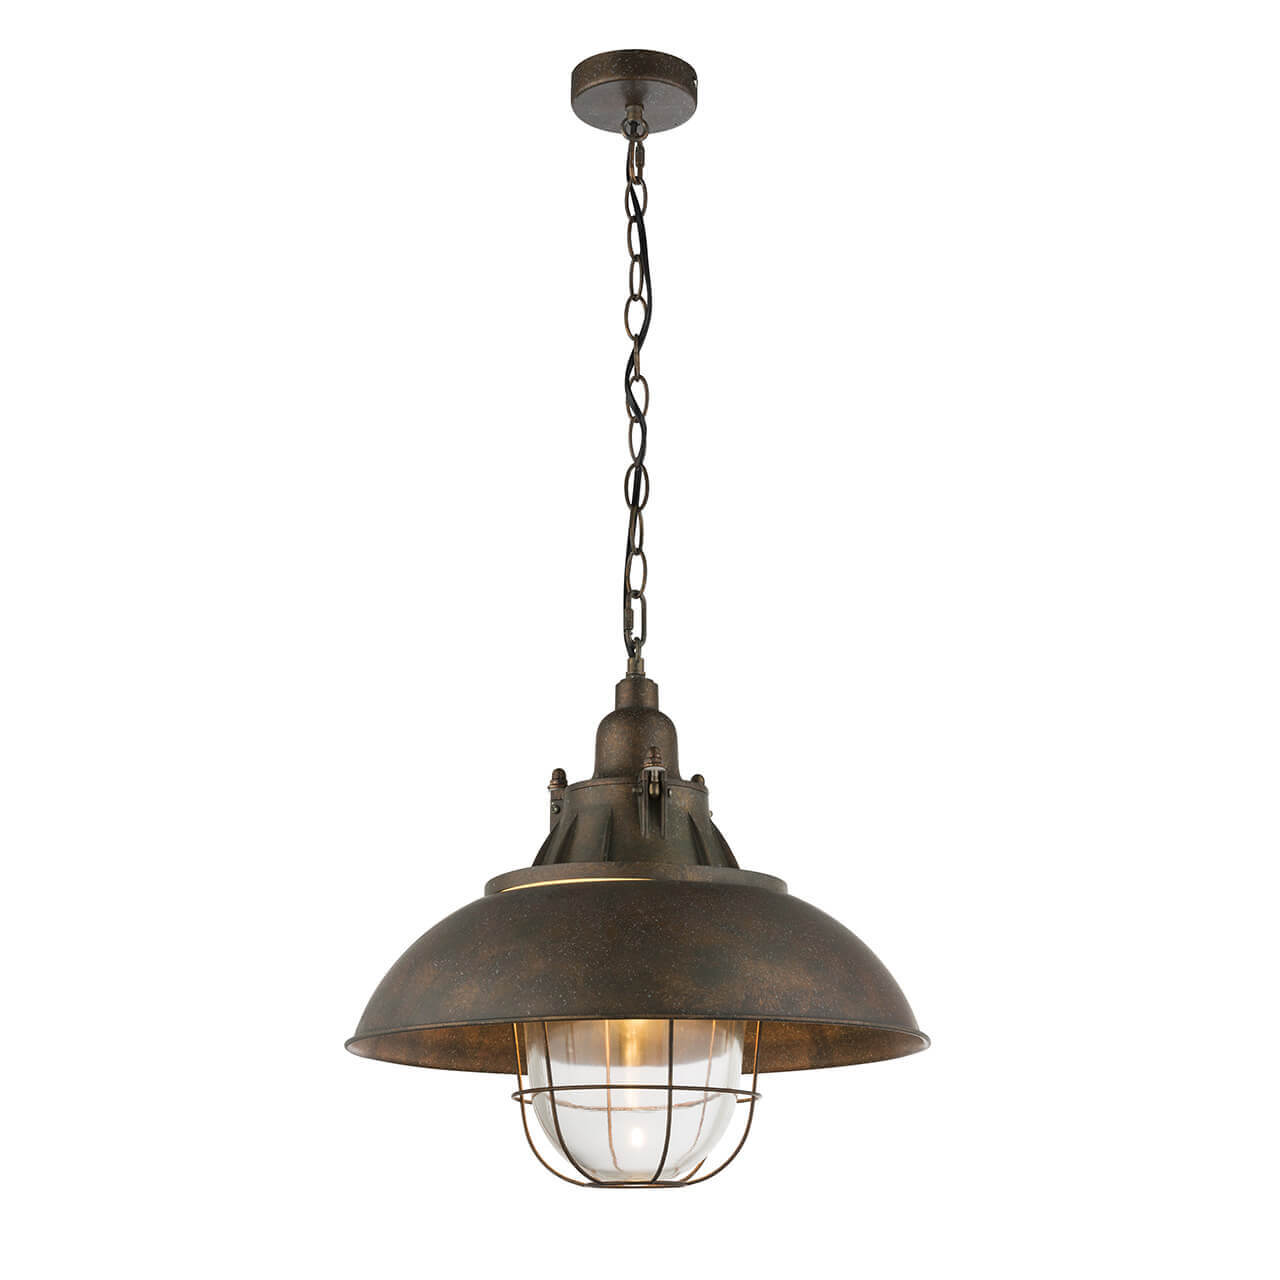 Plafonska svjetiljka-visilica Jaden 1xE27 60W  boja rđe Globo